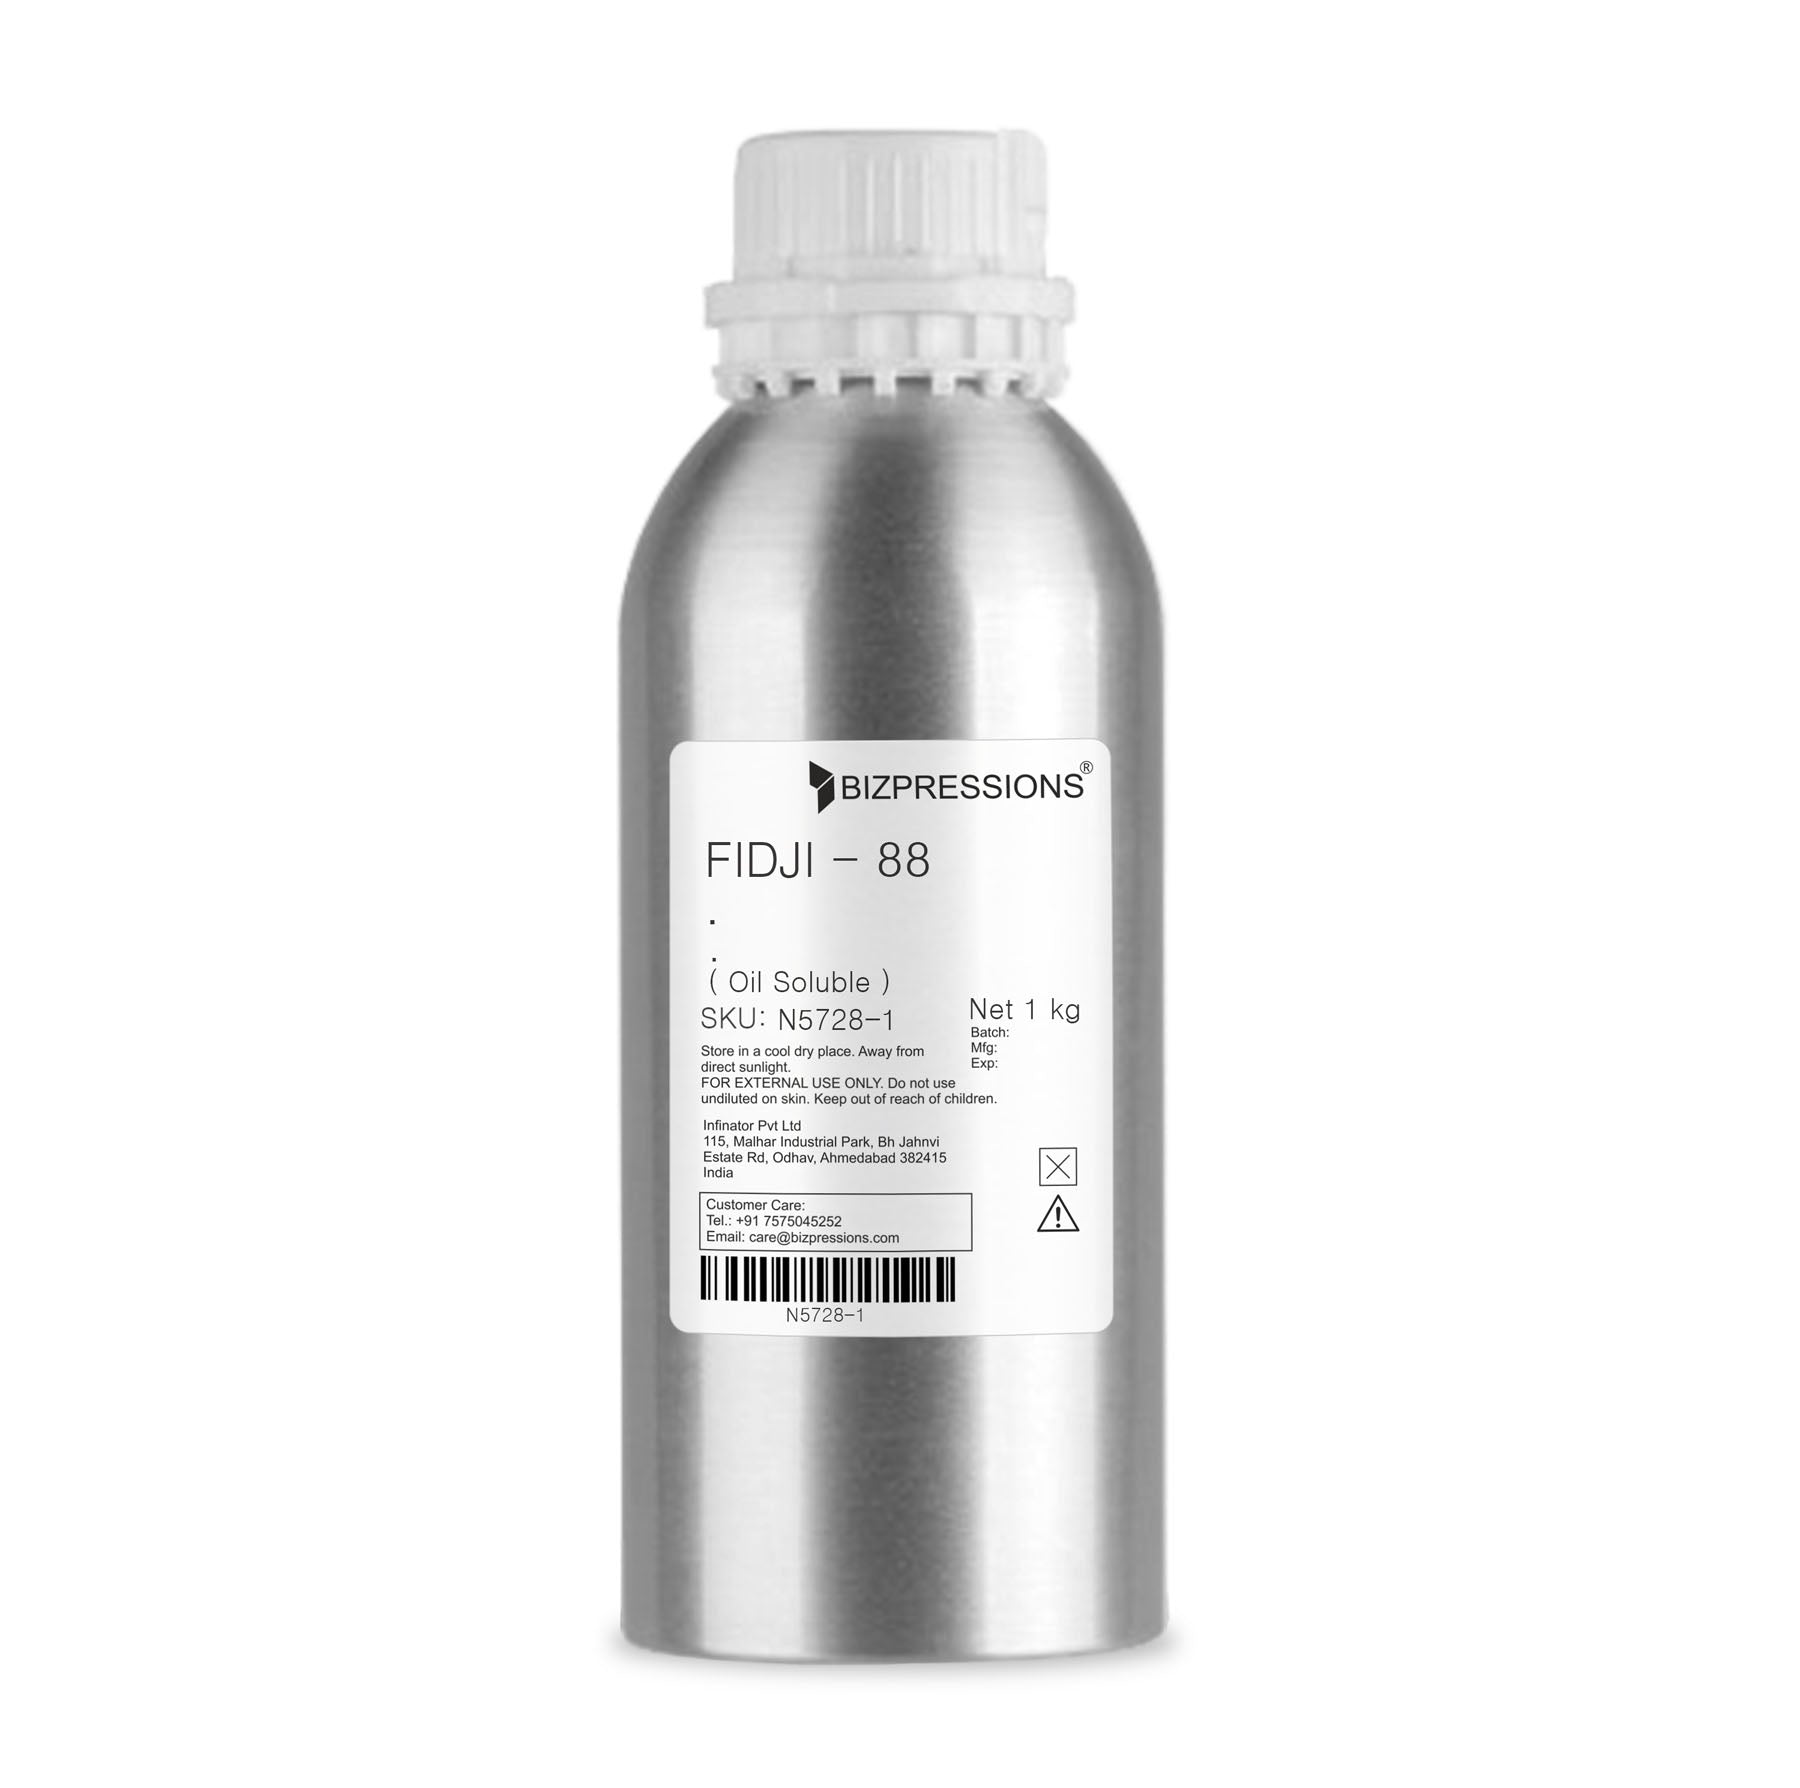 FIDJI - 88 - Fragrance ( Oil Soluble ) - 1 kg